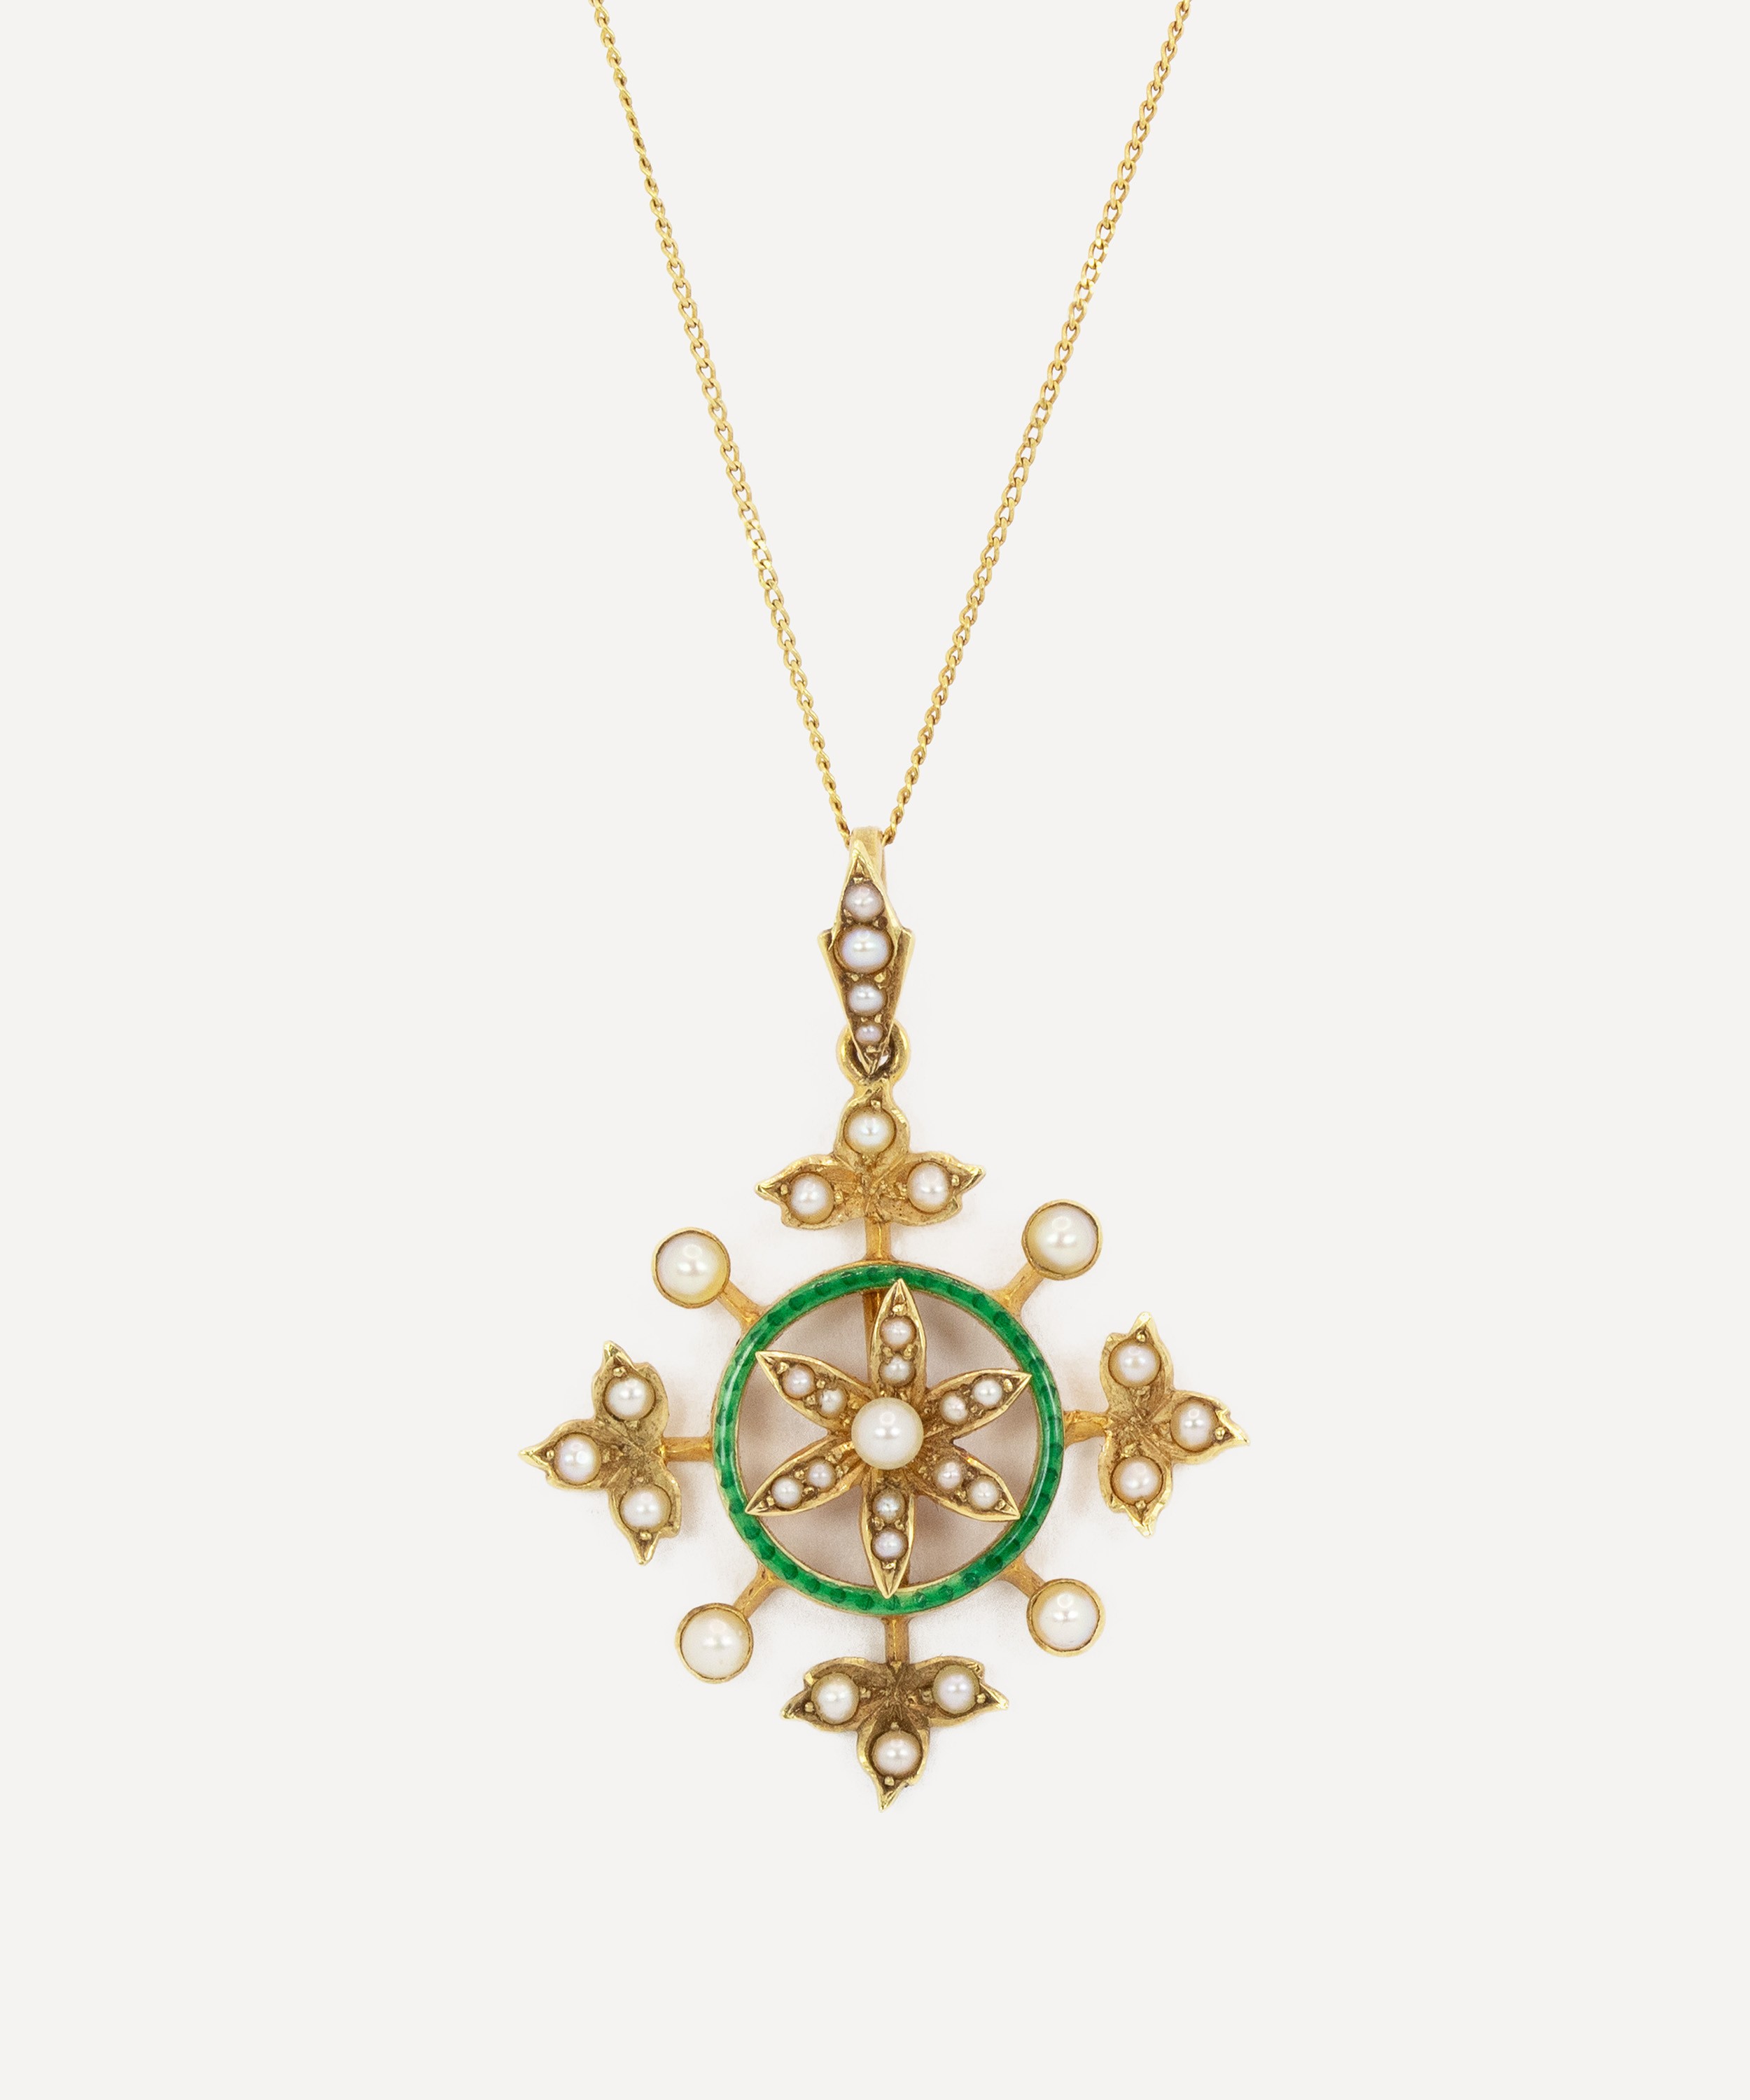 Kojis - 15ct Gold Edwardian Enamel and Pearl Pendant Necklace